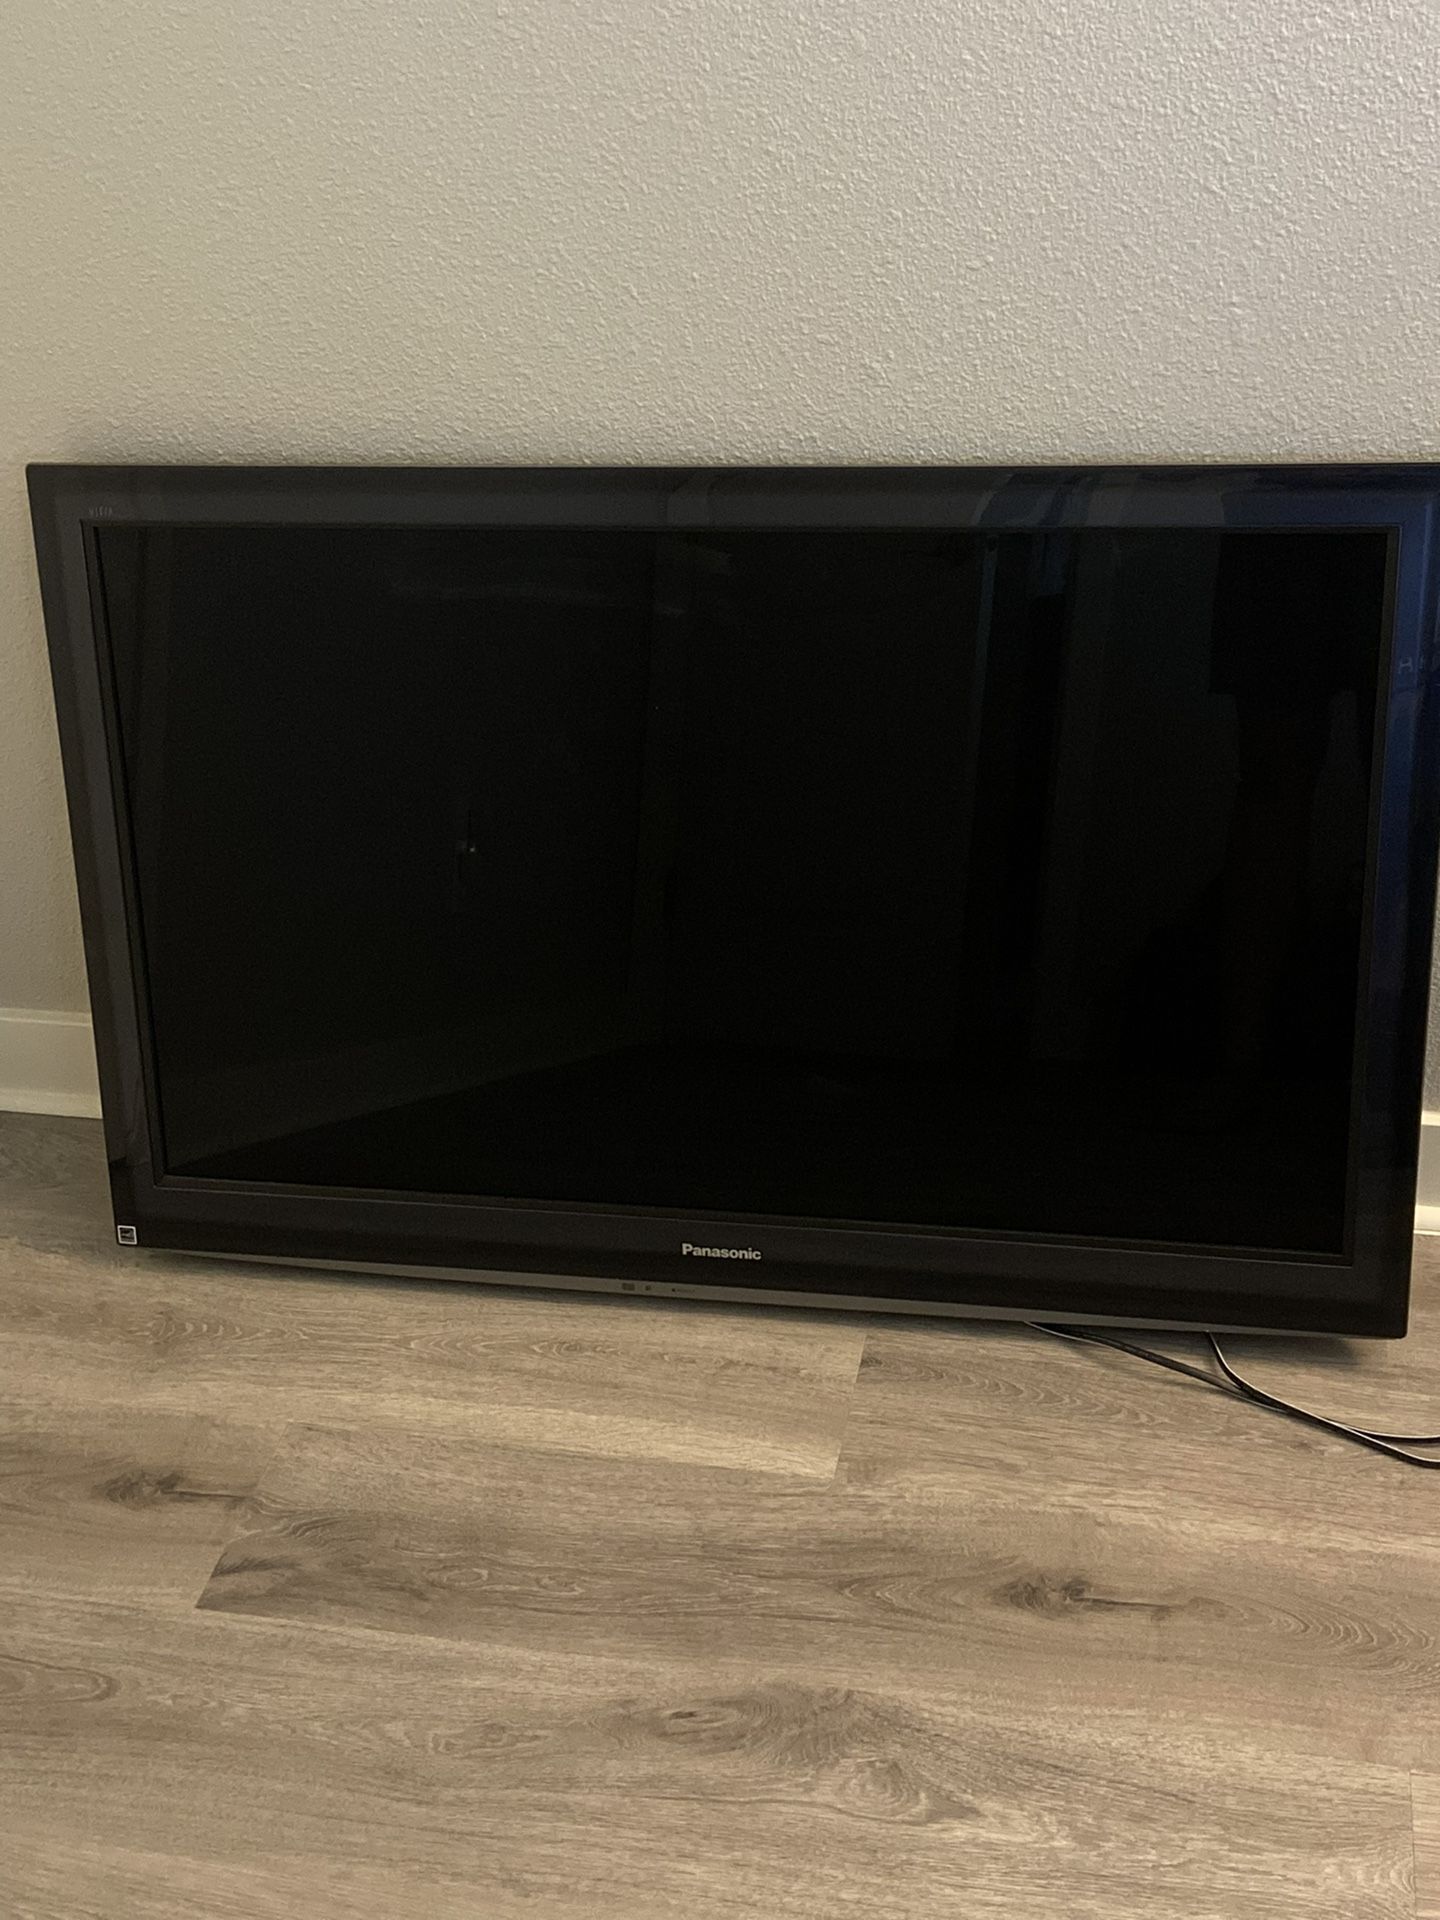 Flatscreen TV- 42”